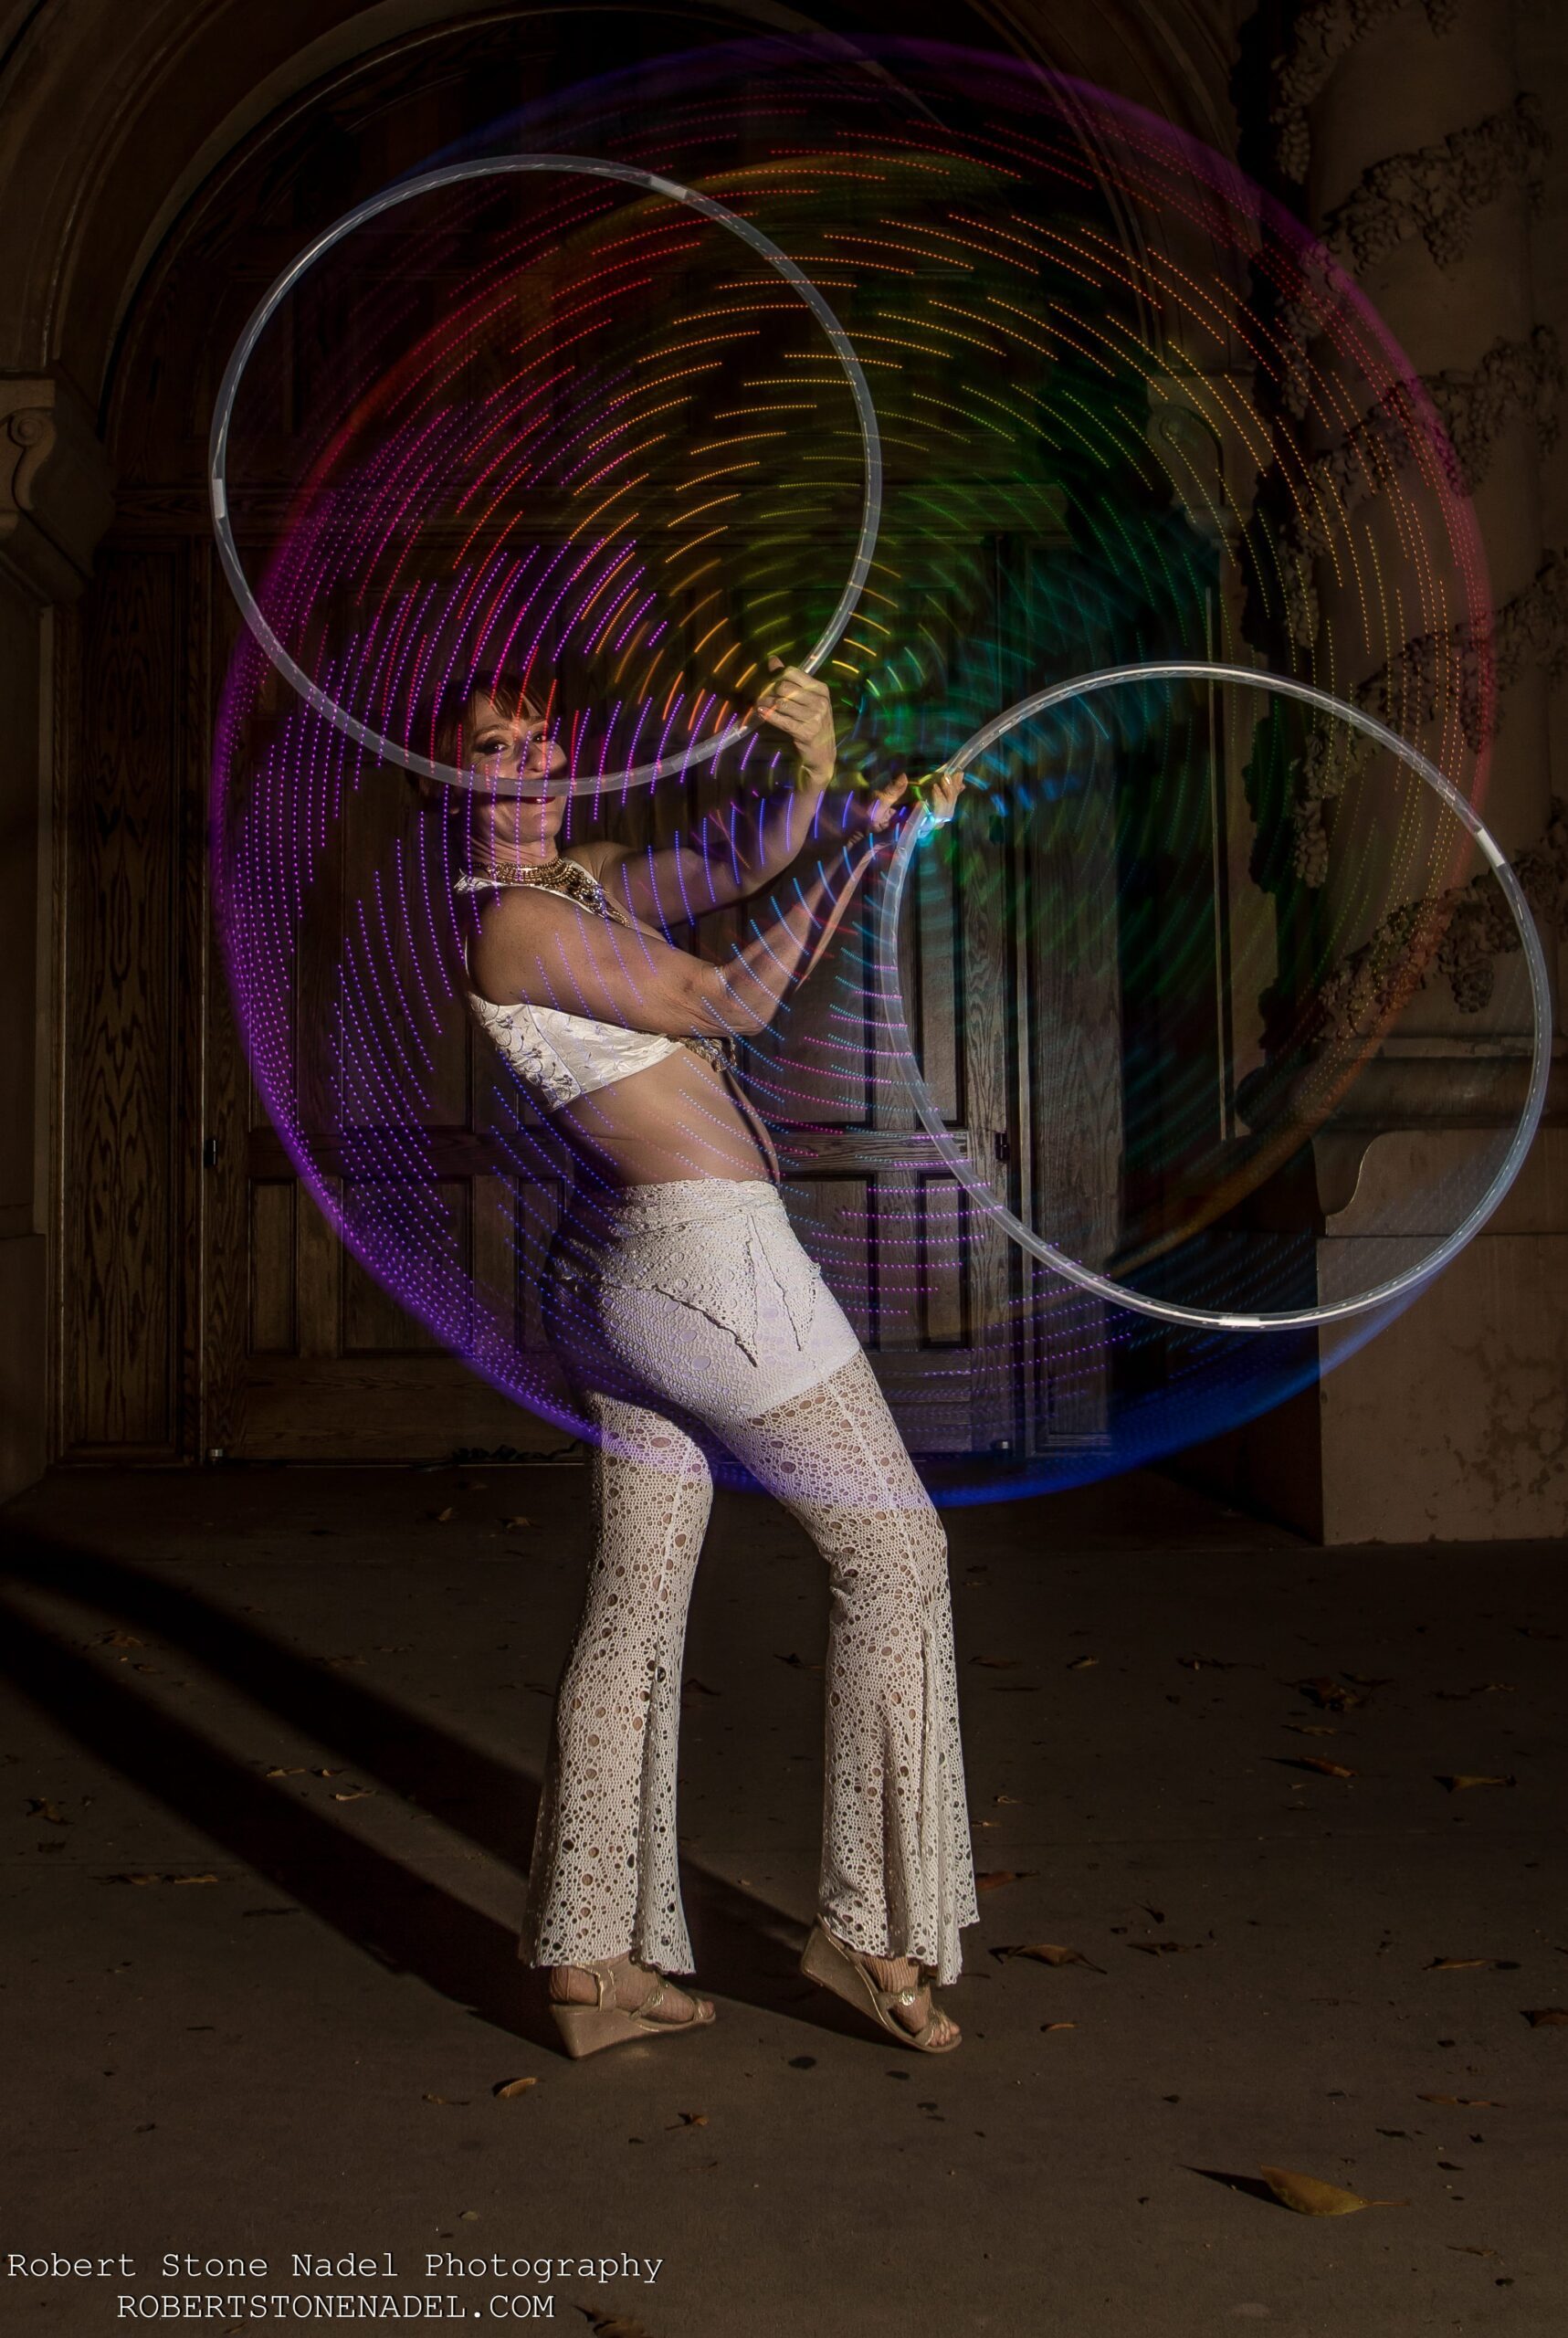 San Diego LED Dancer with hula hoops